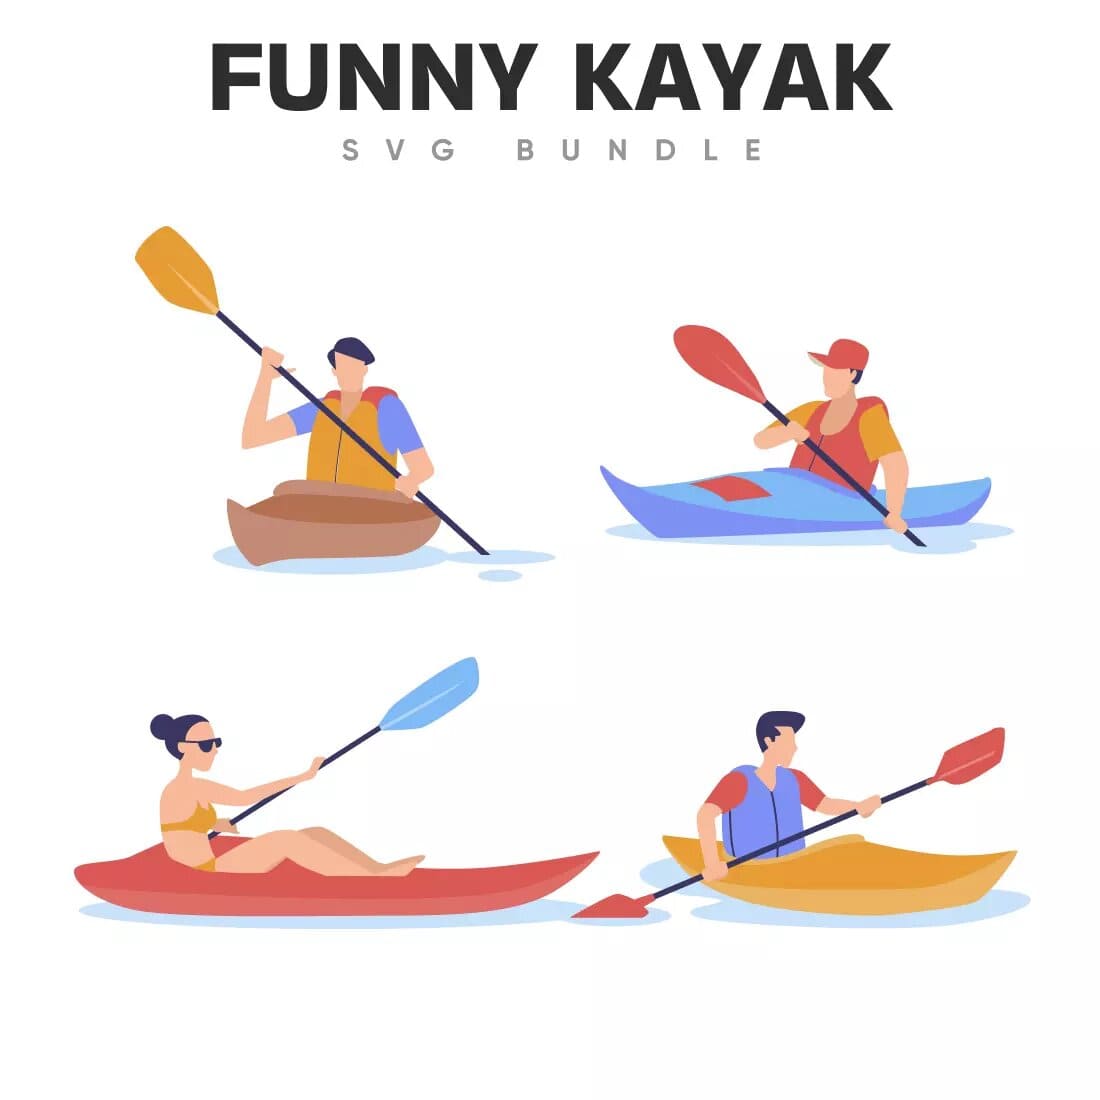 Funny Kayak SVG Bundle Preview 2.